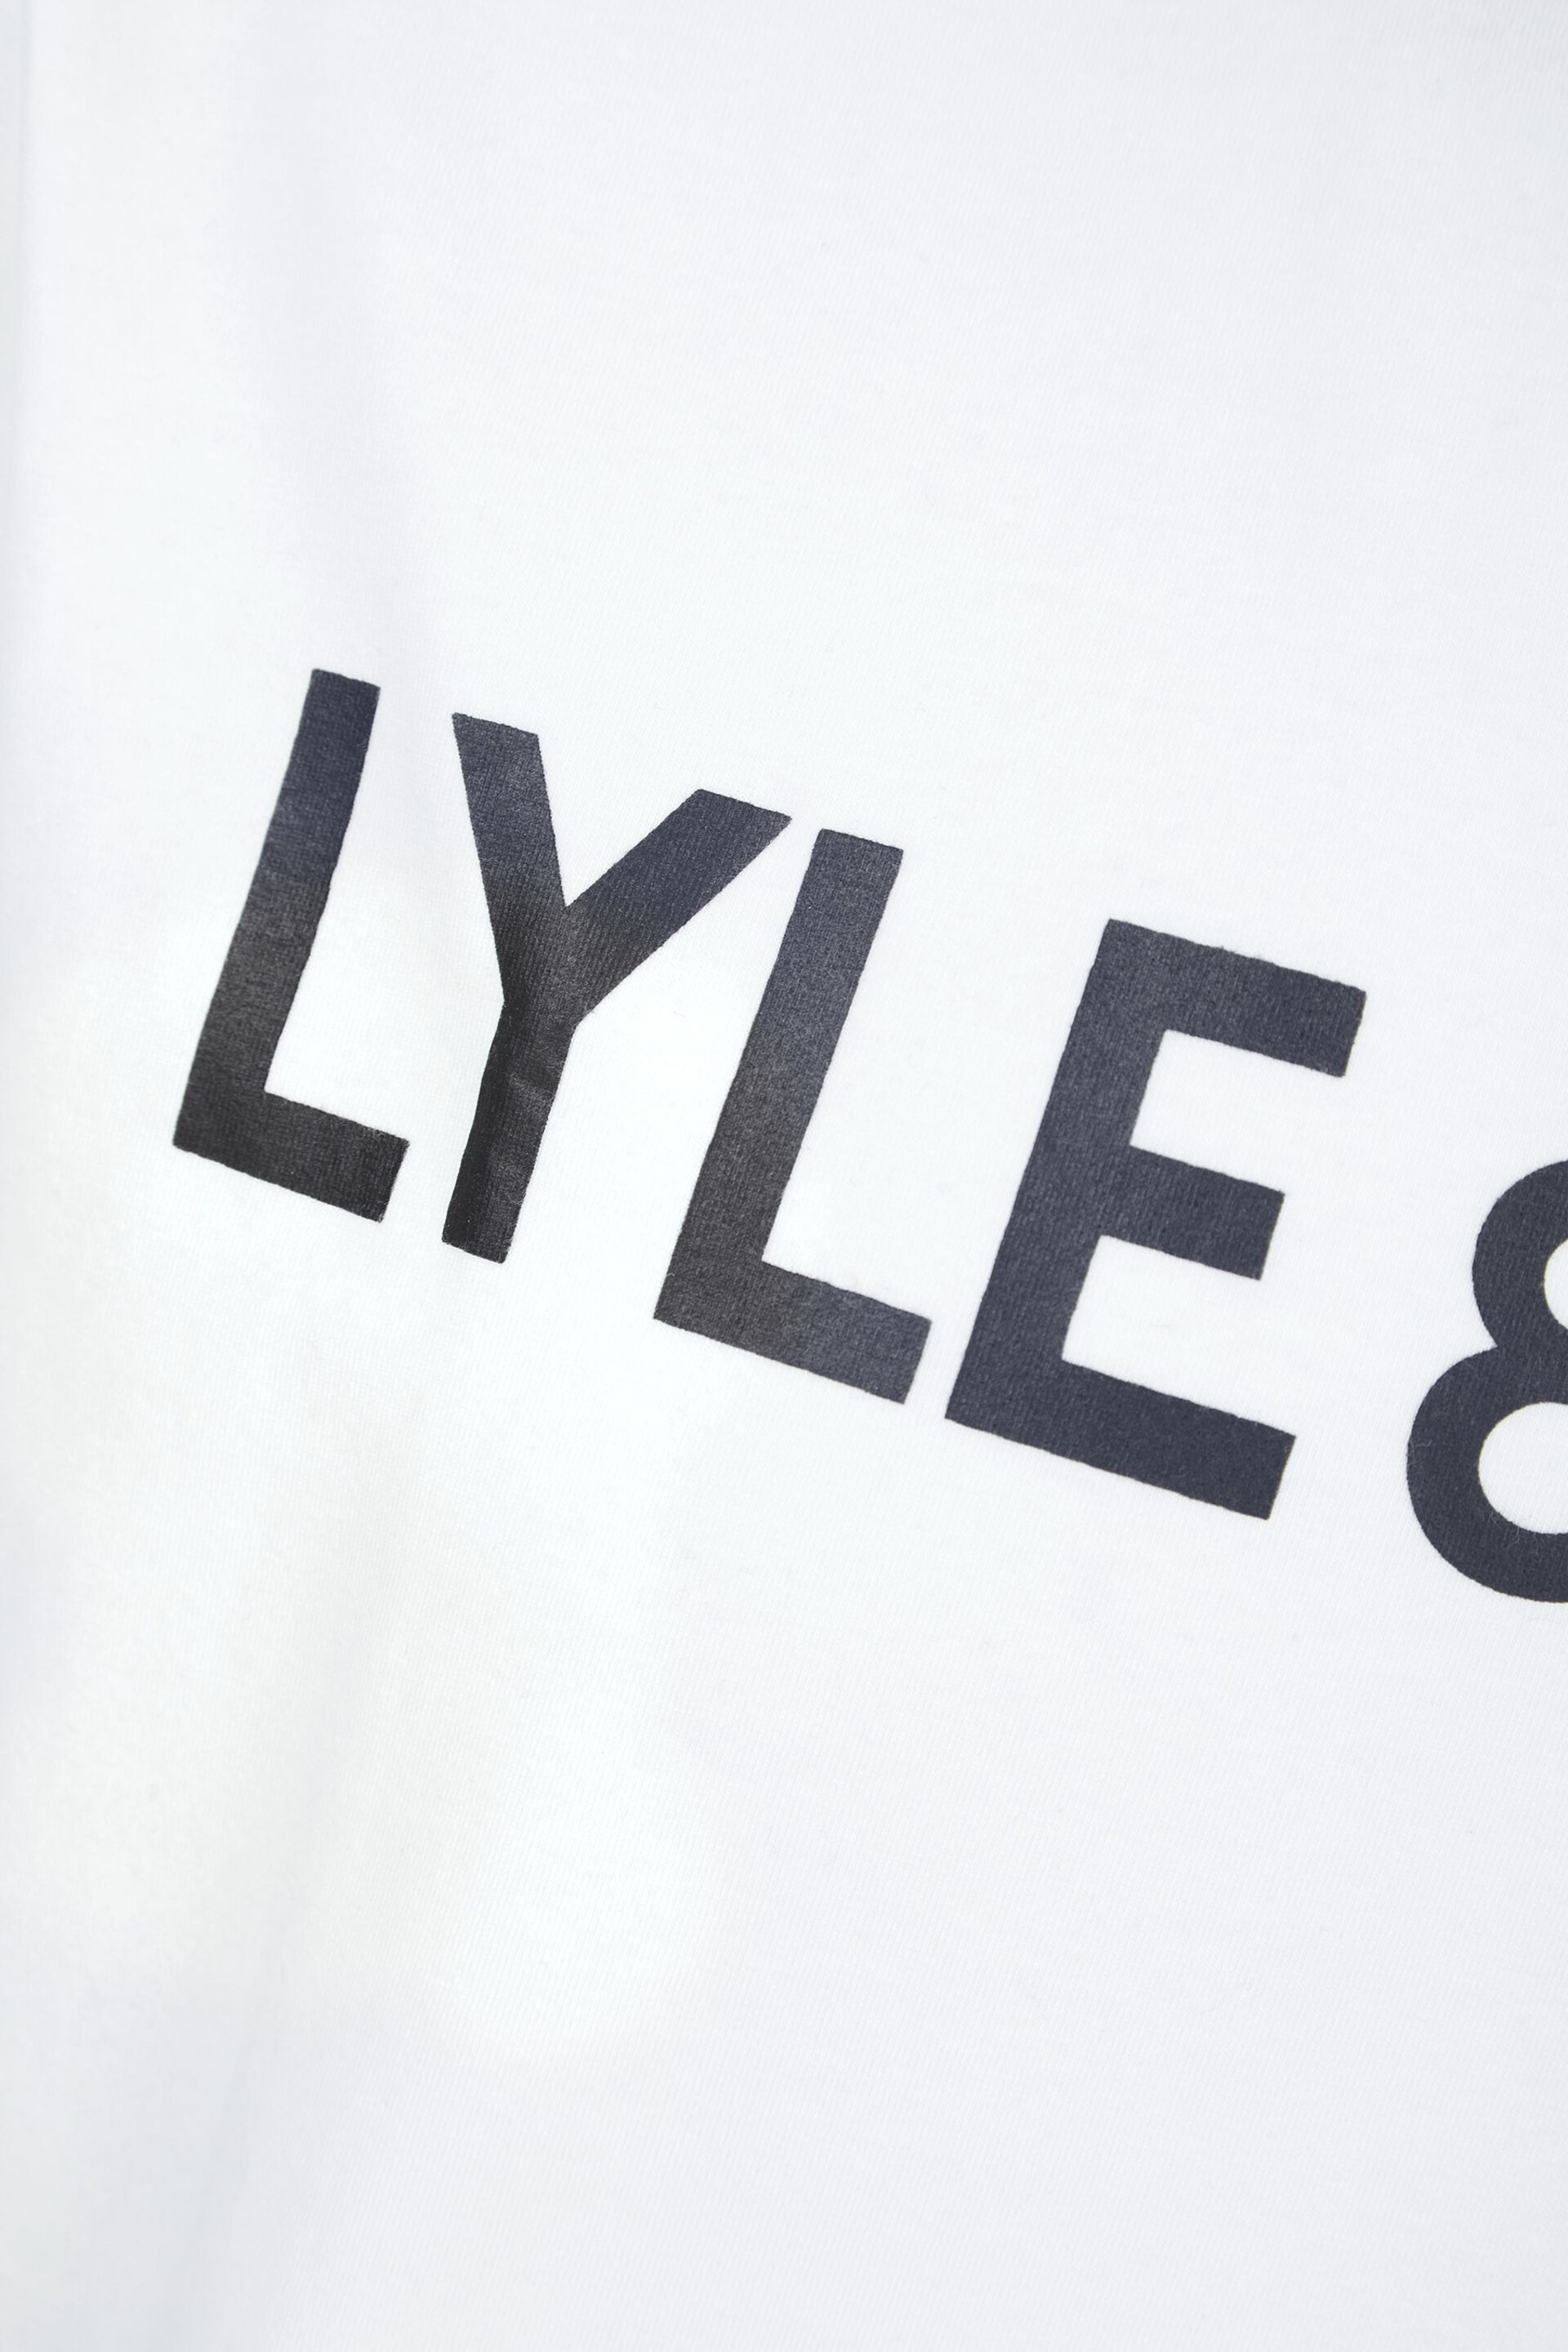 Lyle & Scott August Black Loungewear T-Shirts 3 Pack - Image 5 of 5